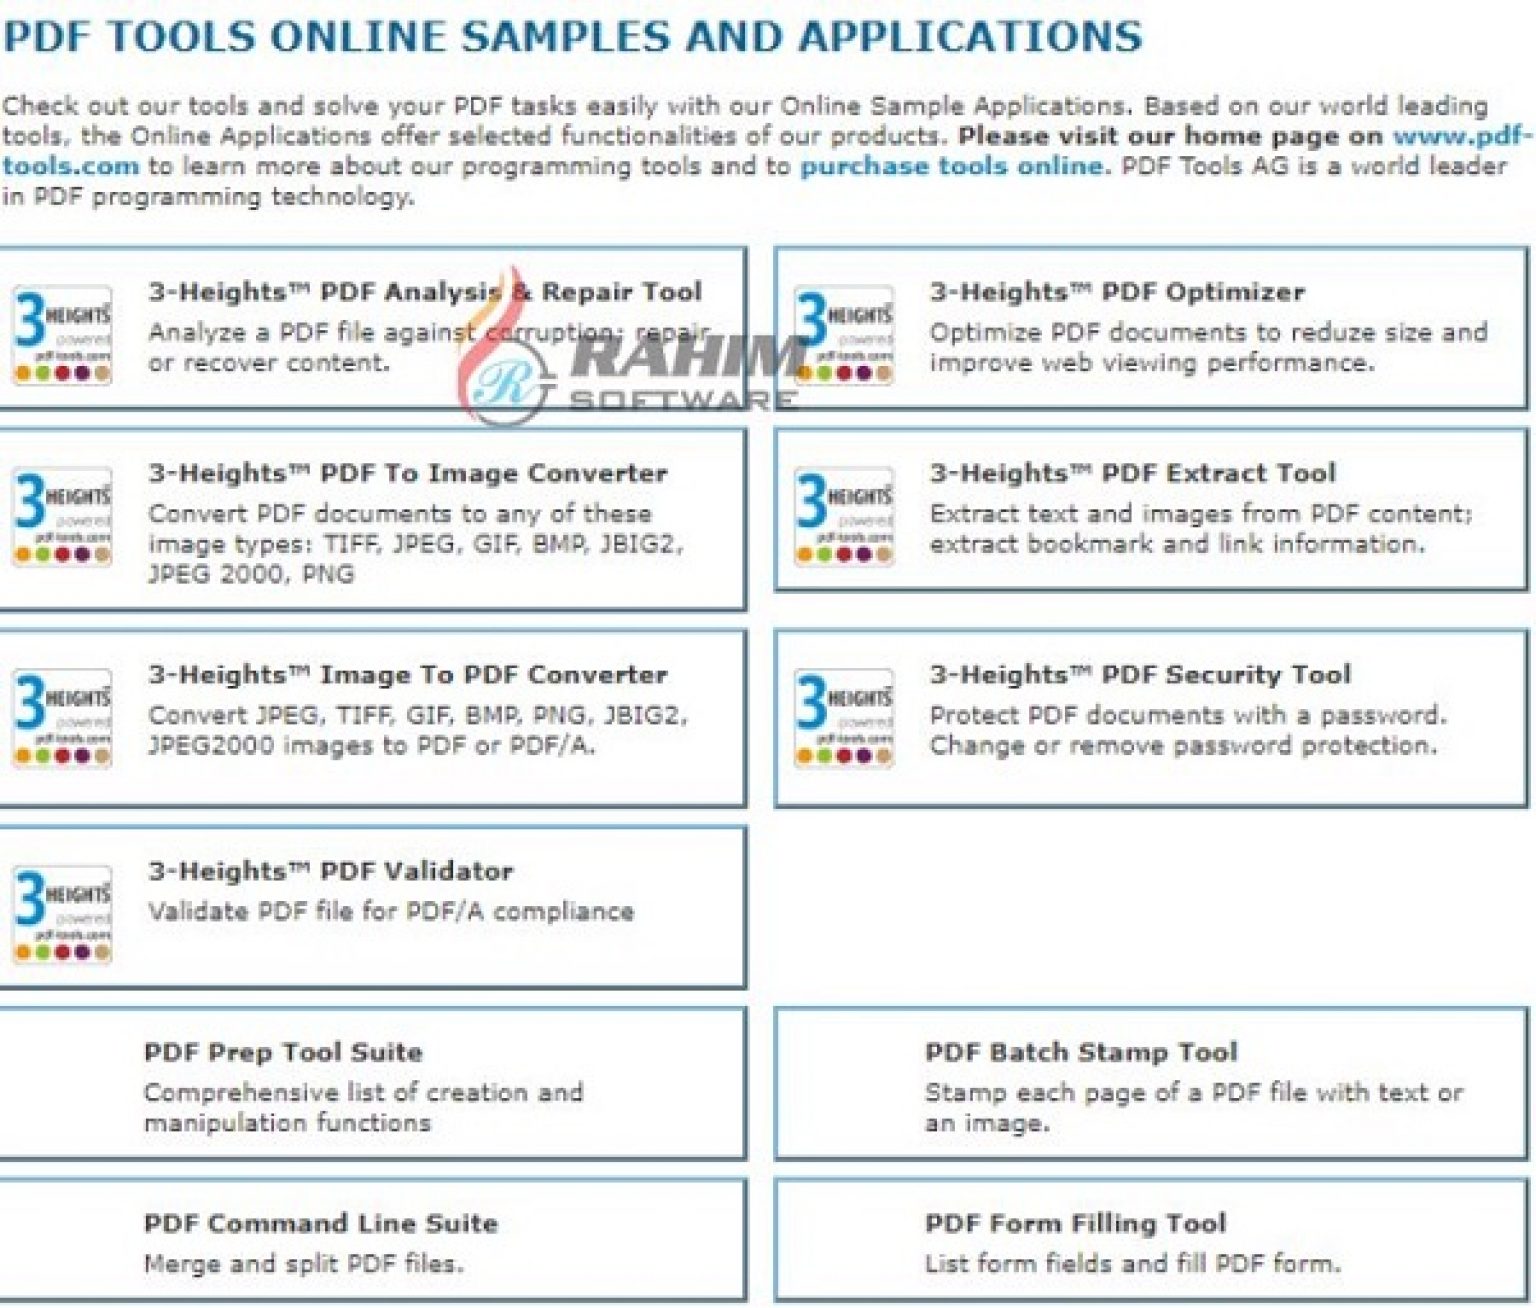 3-Heights PDF Desktop Analysis & Repair Tool 6.27.2.1 download the new version for windows